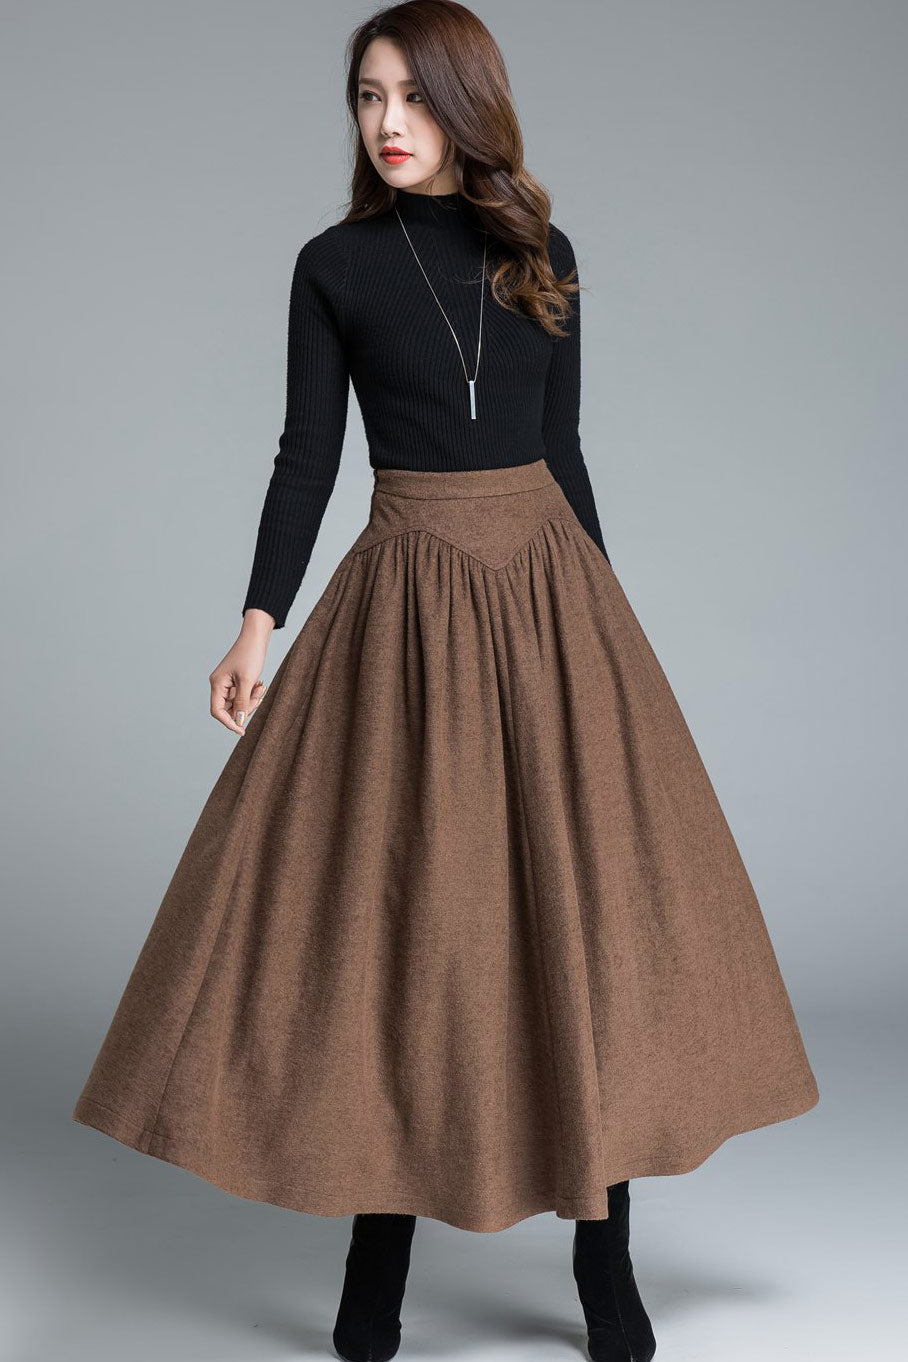 Pattern Roundup: Bubble Hem Skirts and Dresses - Threads